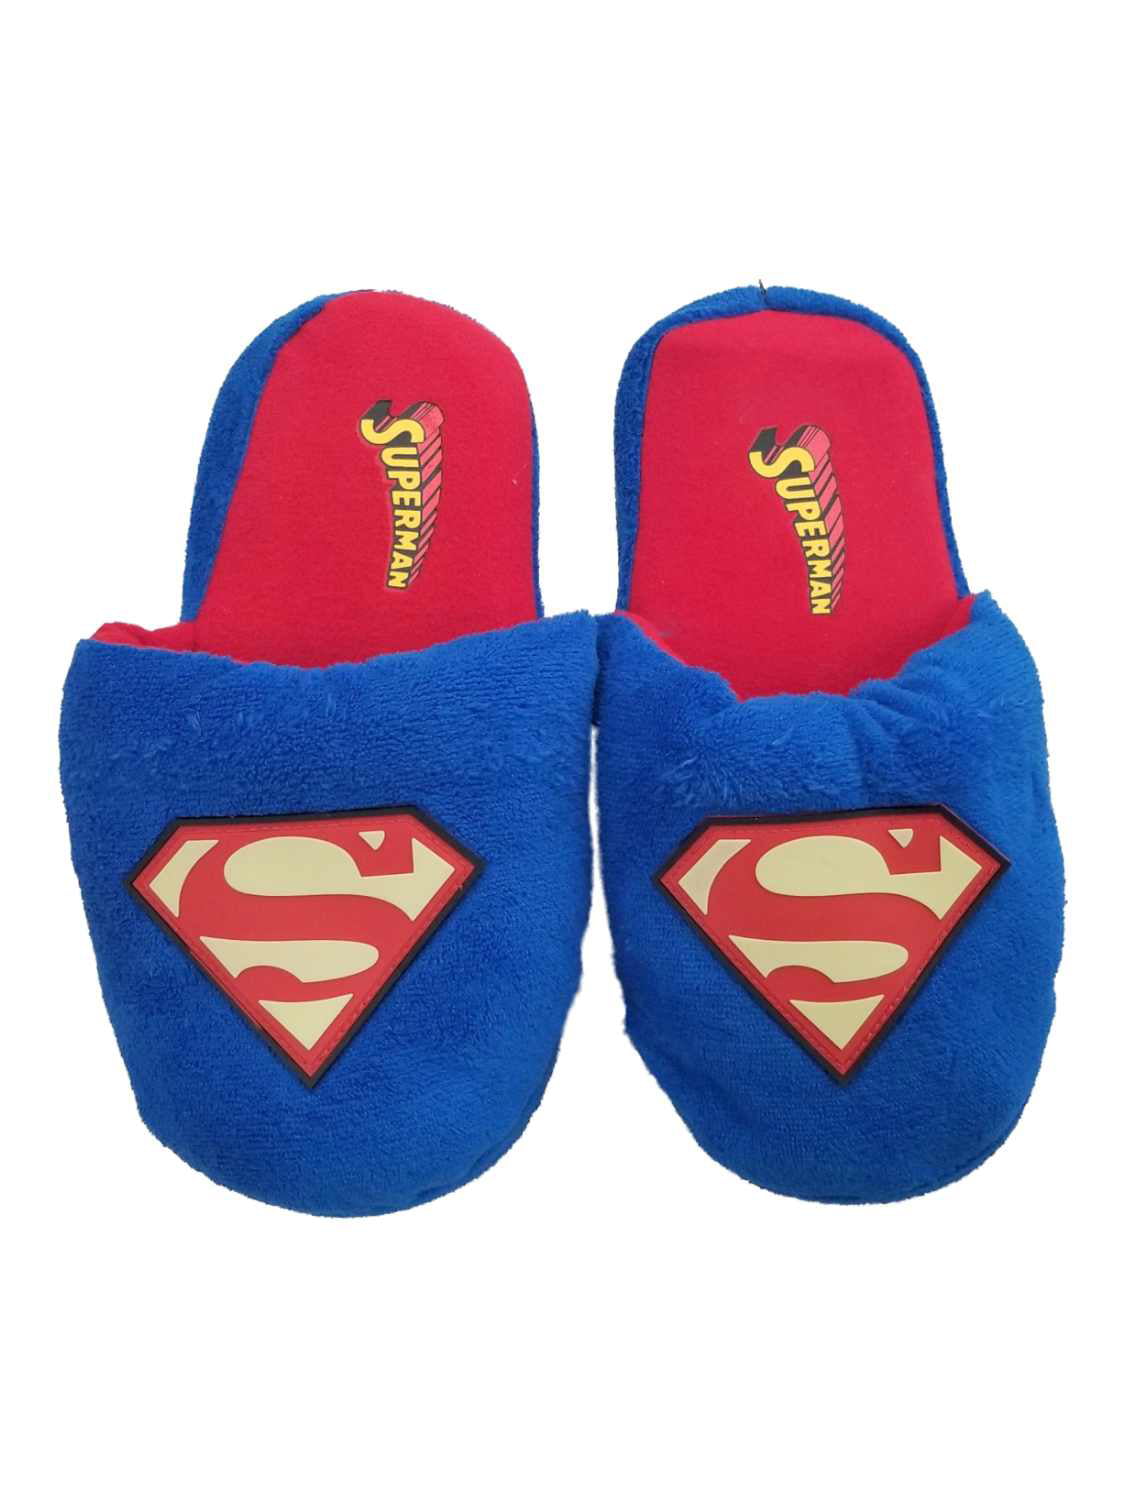 superman slippers